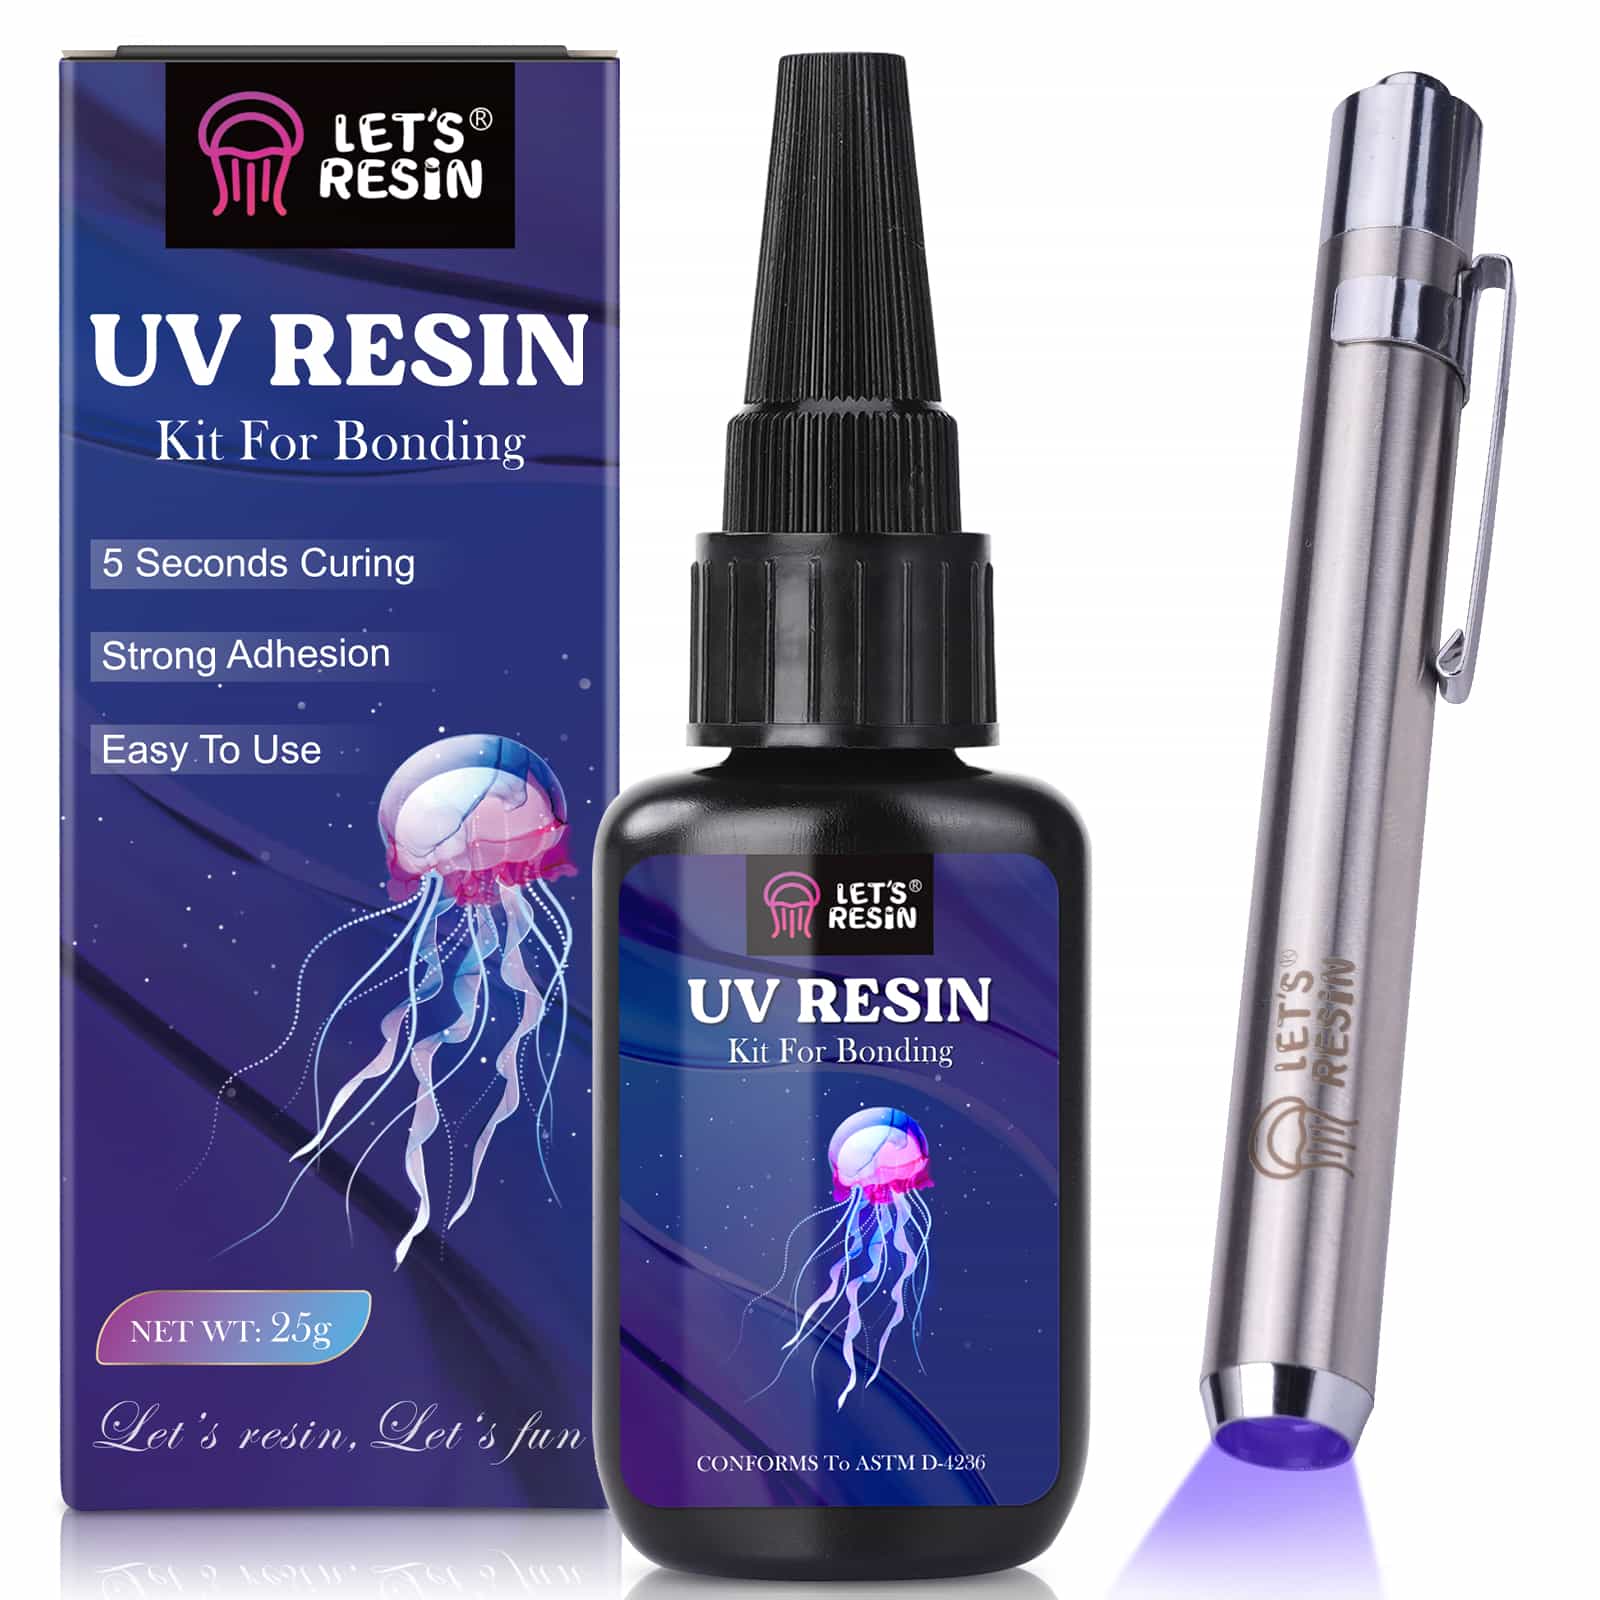 Intro to UV Resin class